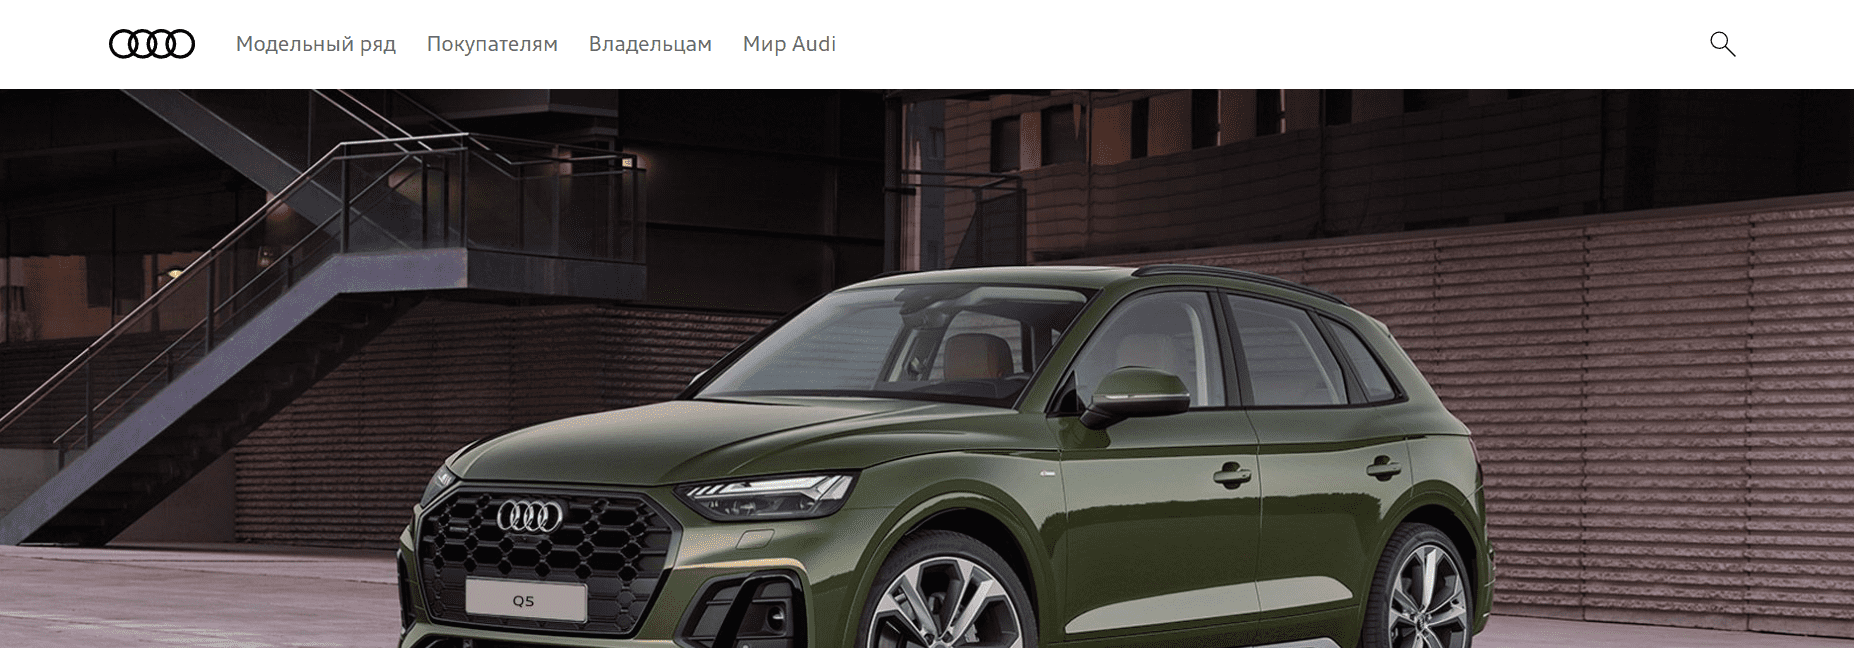 Audi Центра Минск (audi.by) - официальный сайт